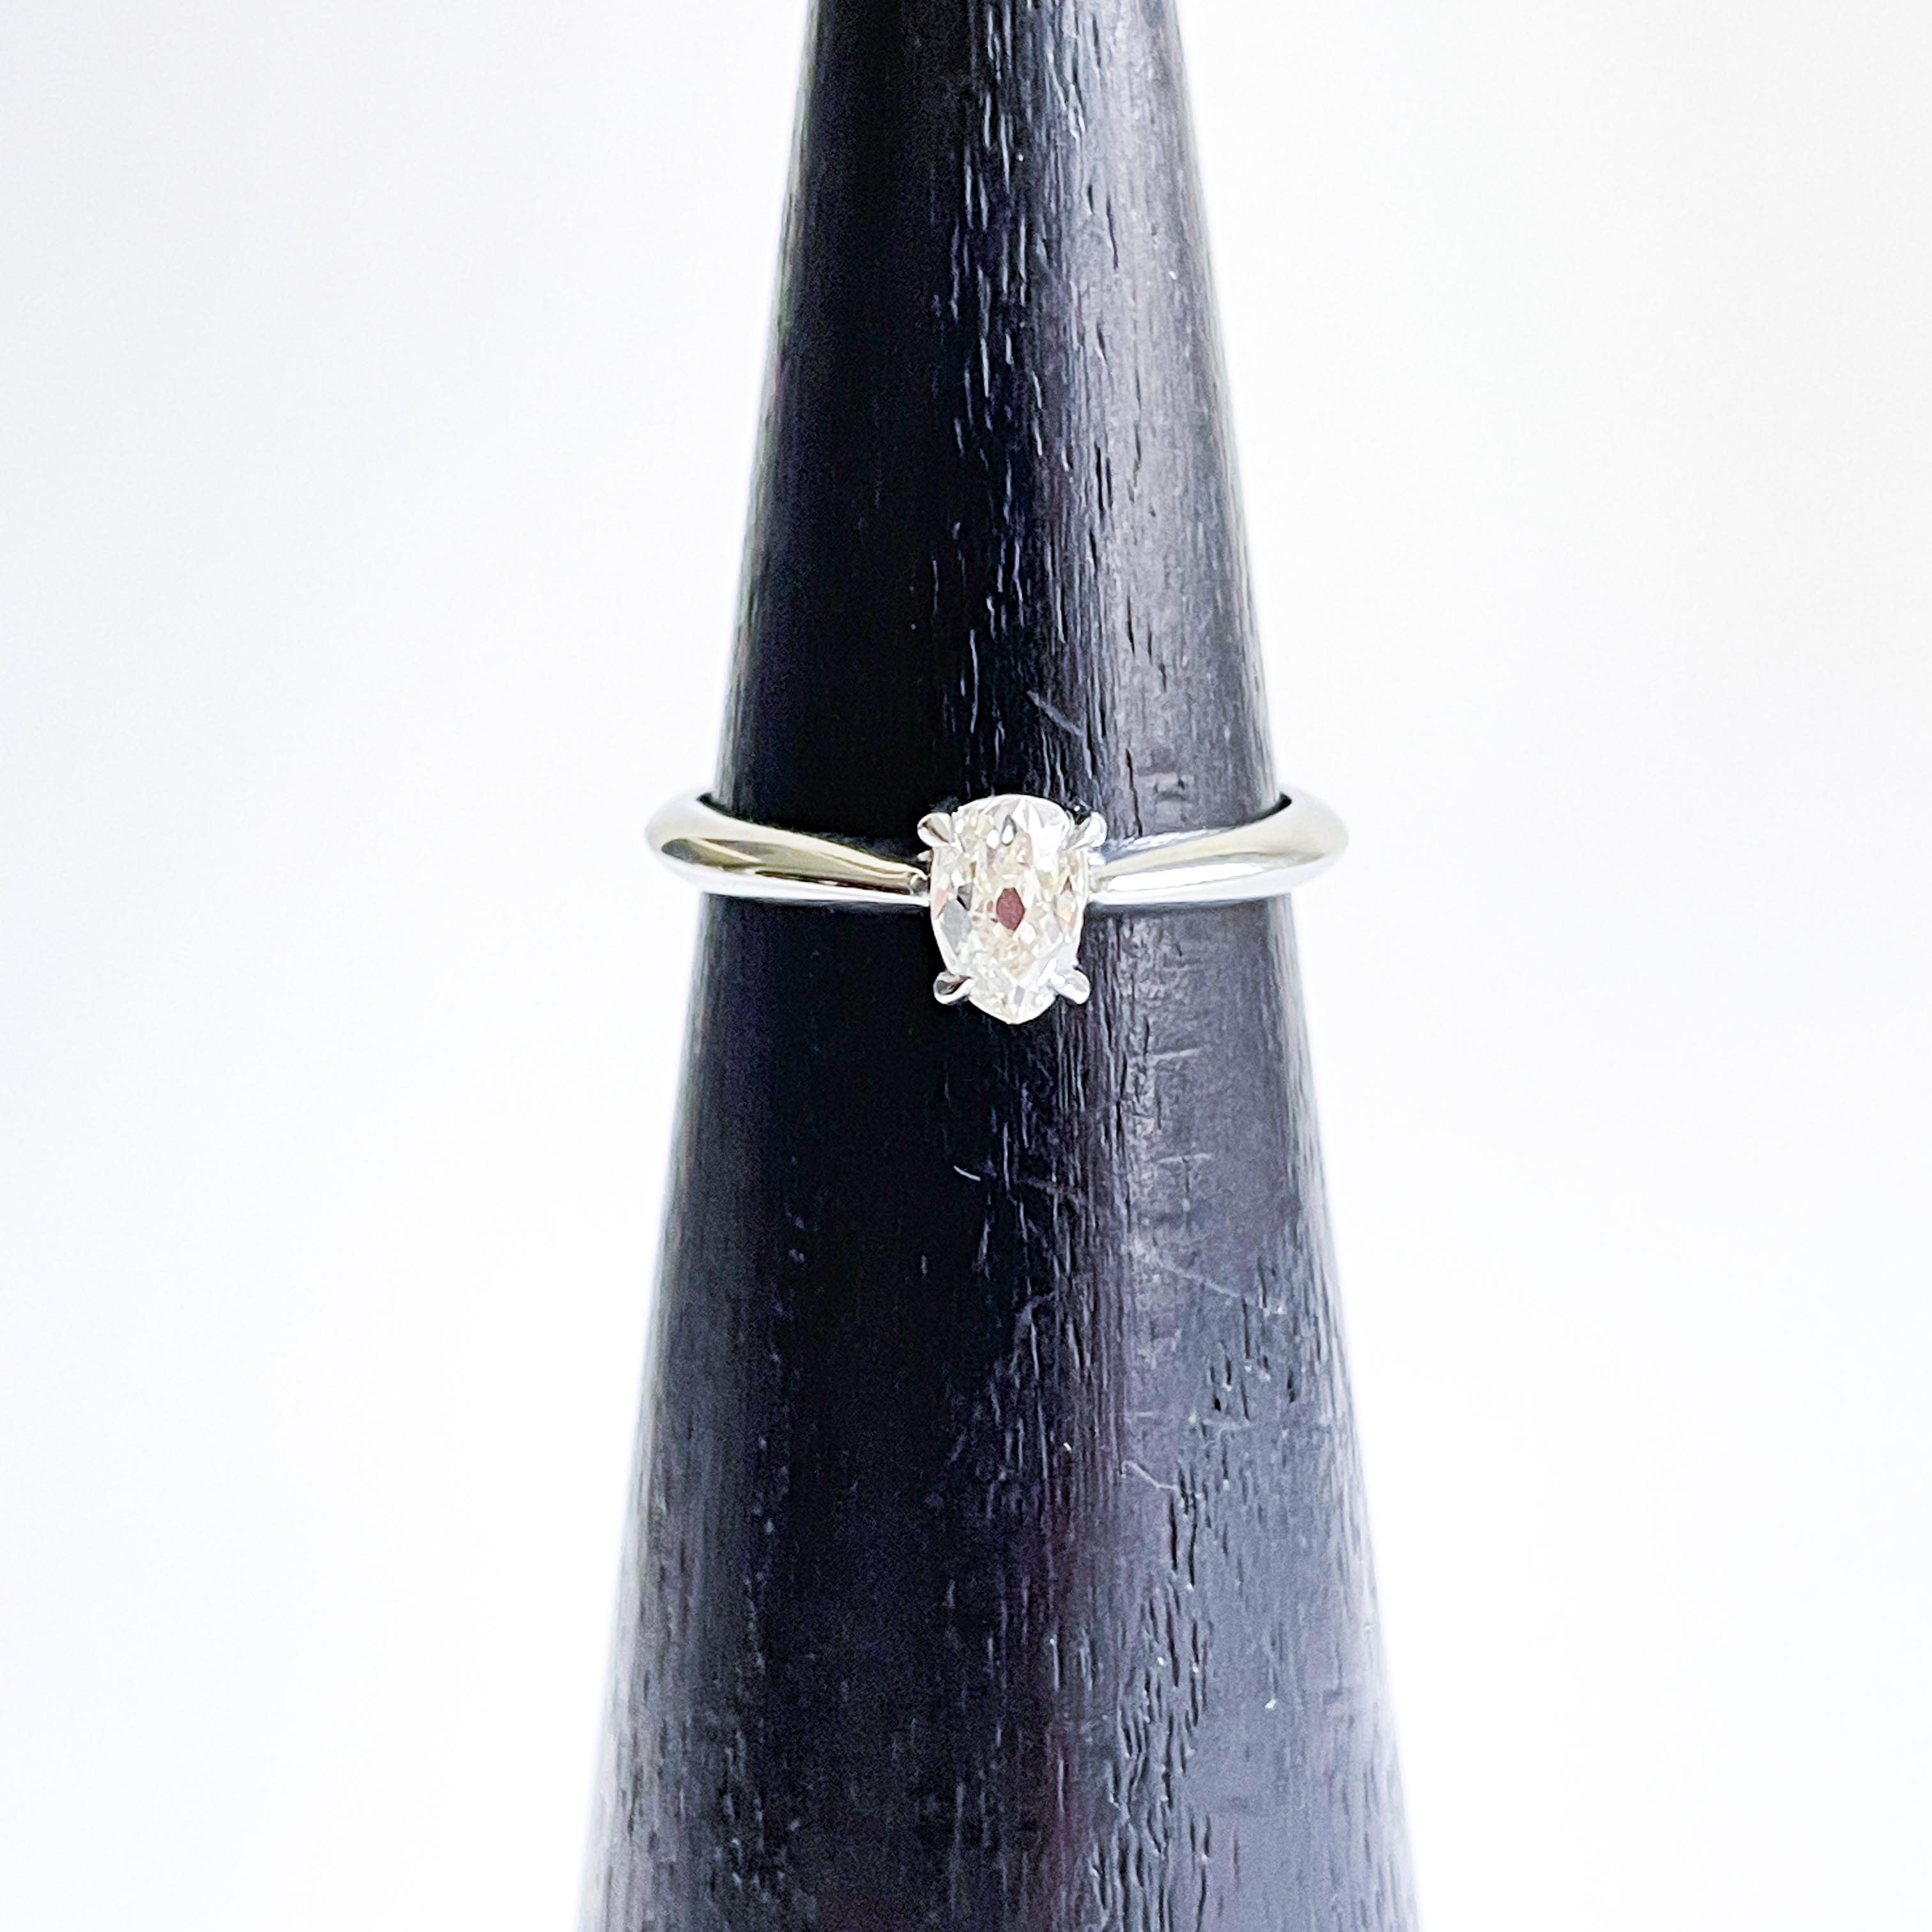 PEYTON: White Gold Old European Pear Cut Diamond Solitaire Ring